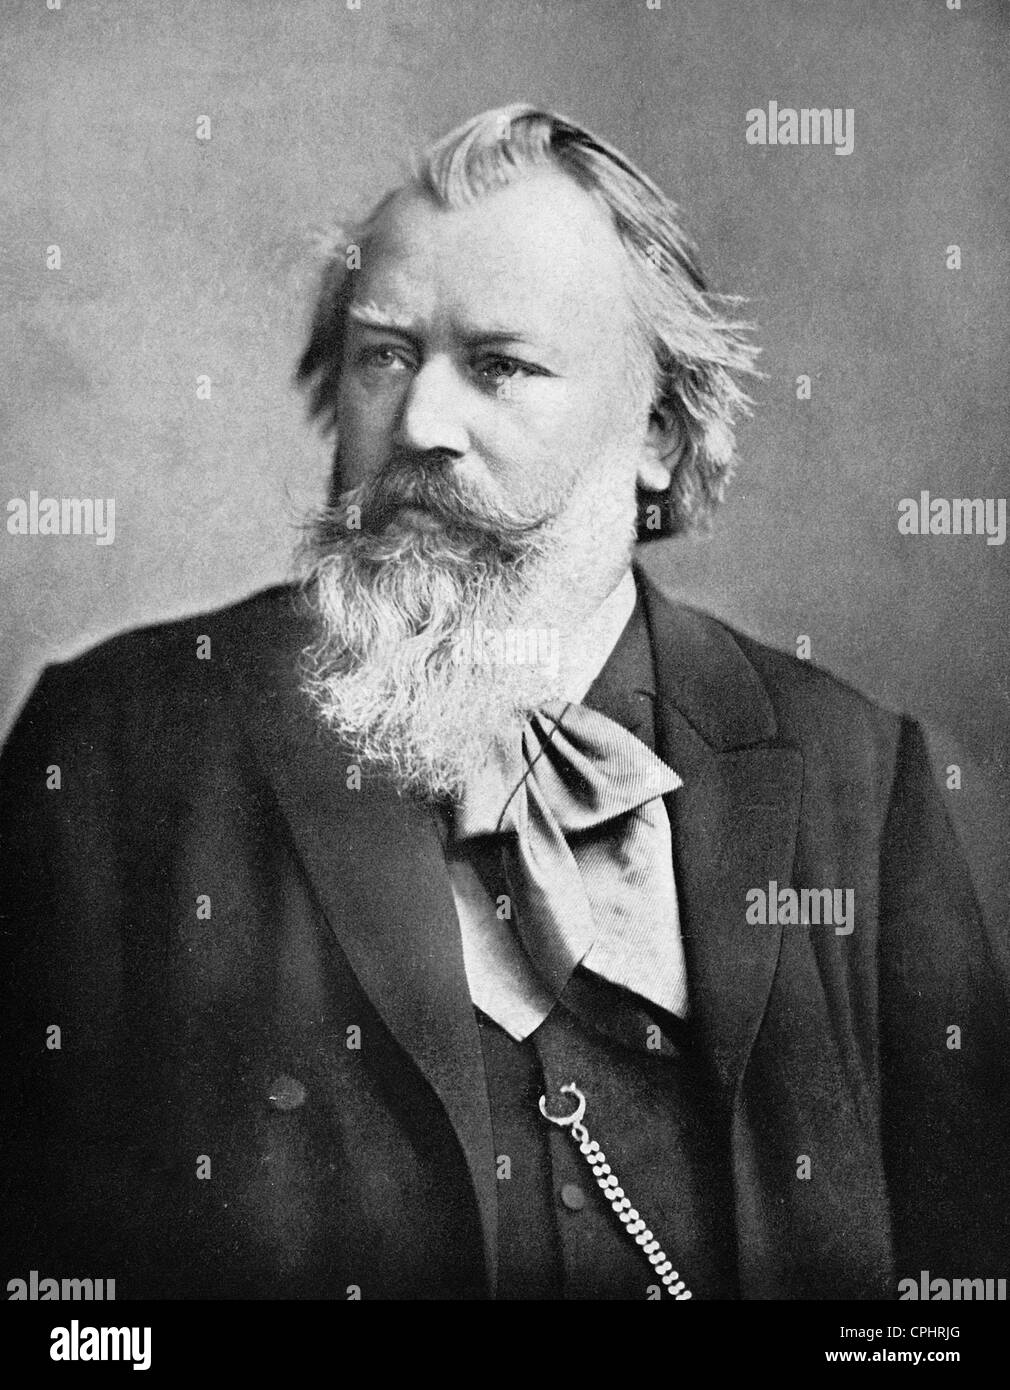 German composer Johannes Brahms (1833-1897). Stock Photo